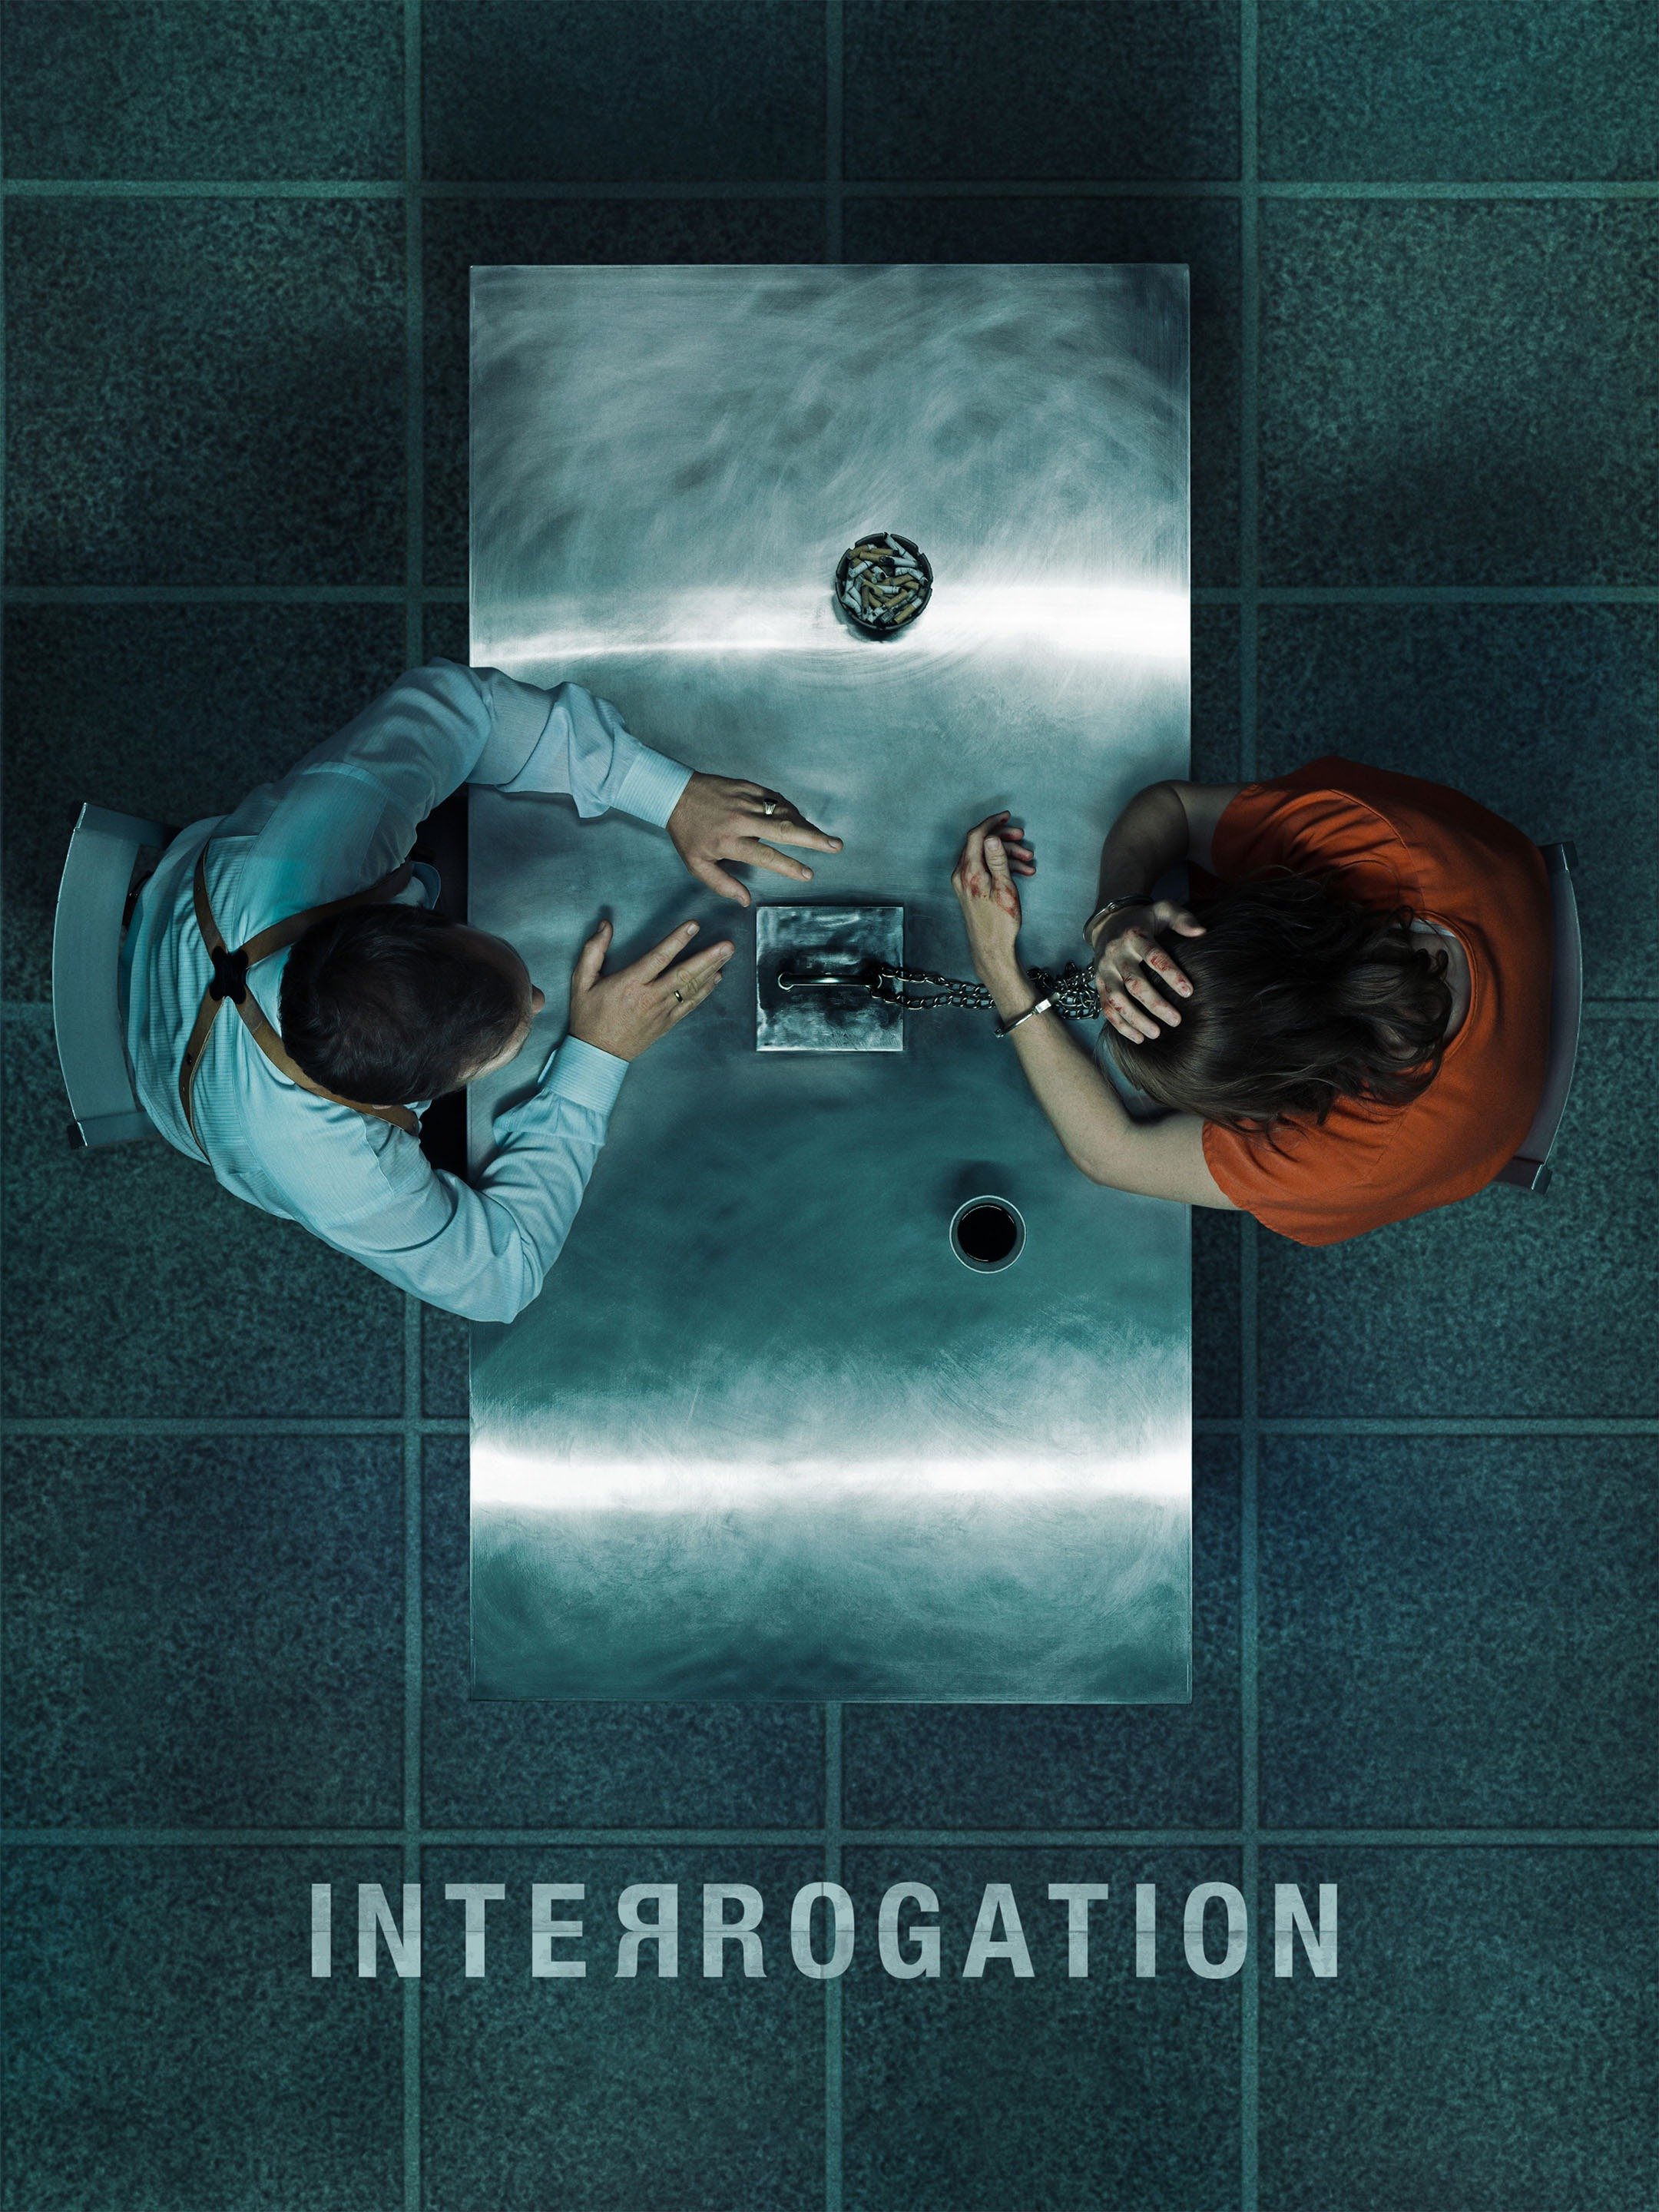 Interrogation Videos